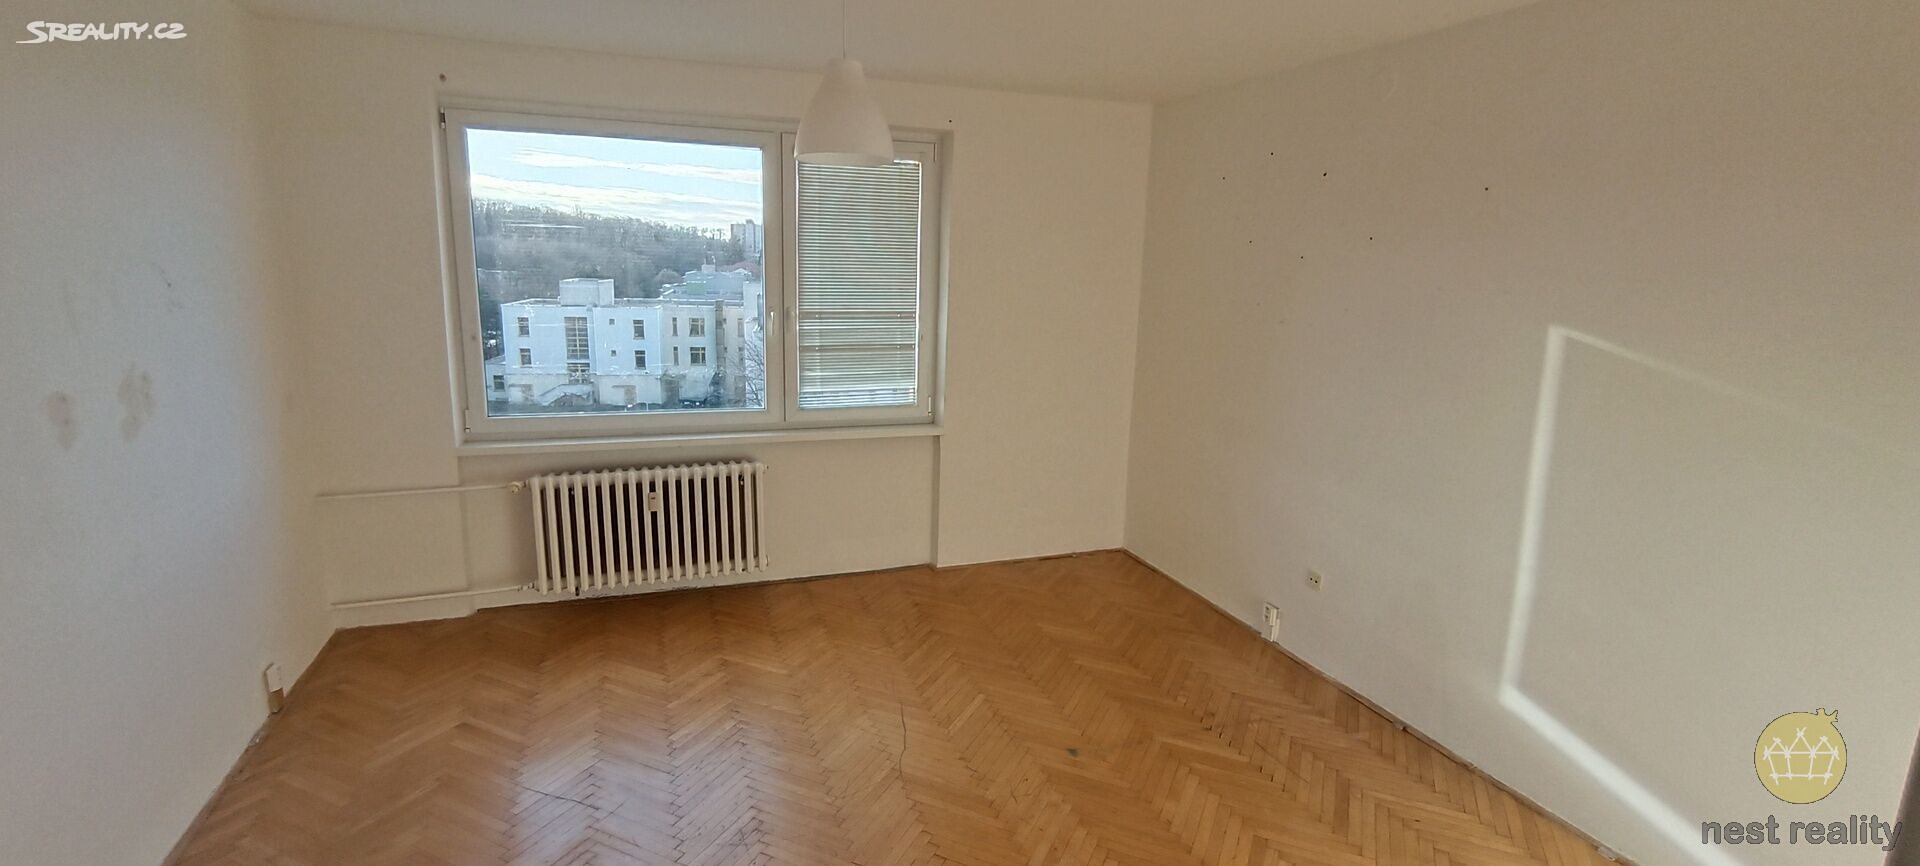 Prodej bytu 1+1 44 m², Chvatěrubská, Praha 8 - Čimice